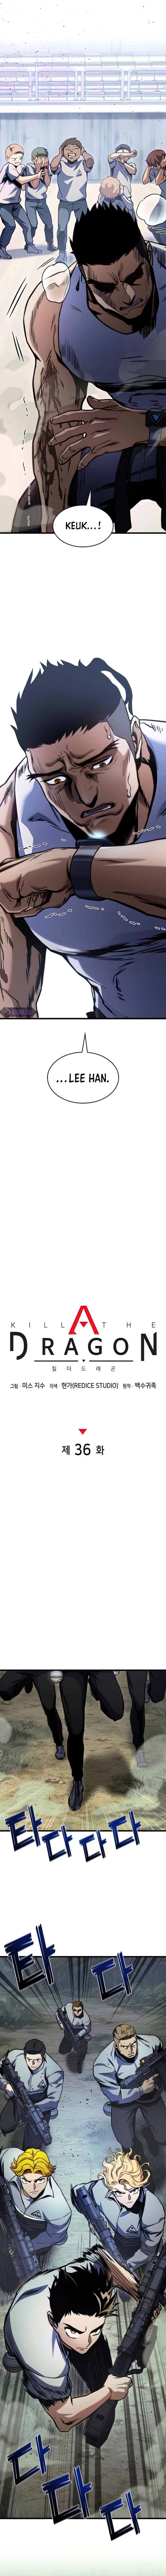 kill_the_dragon_36_5